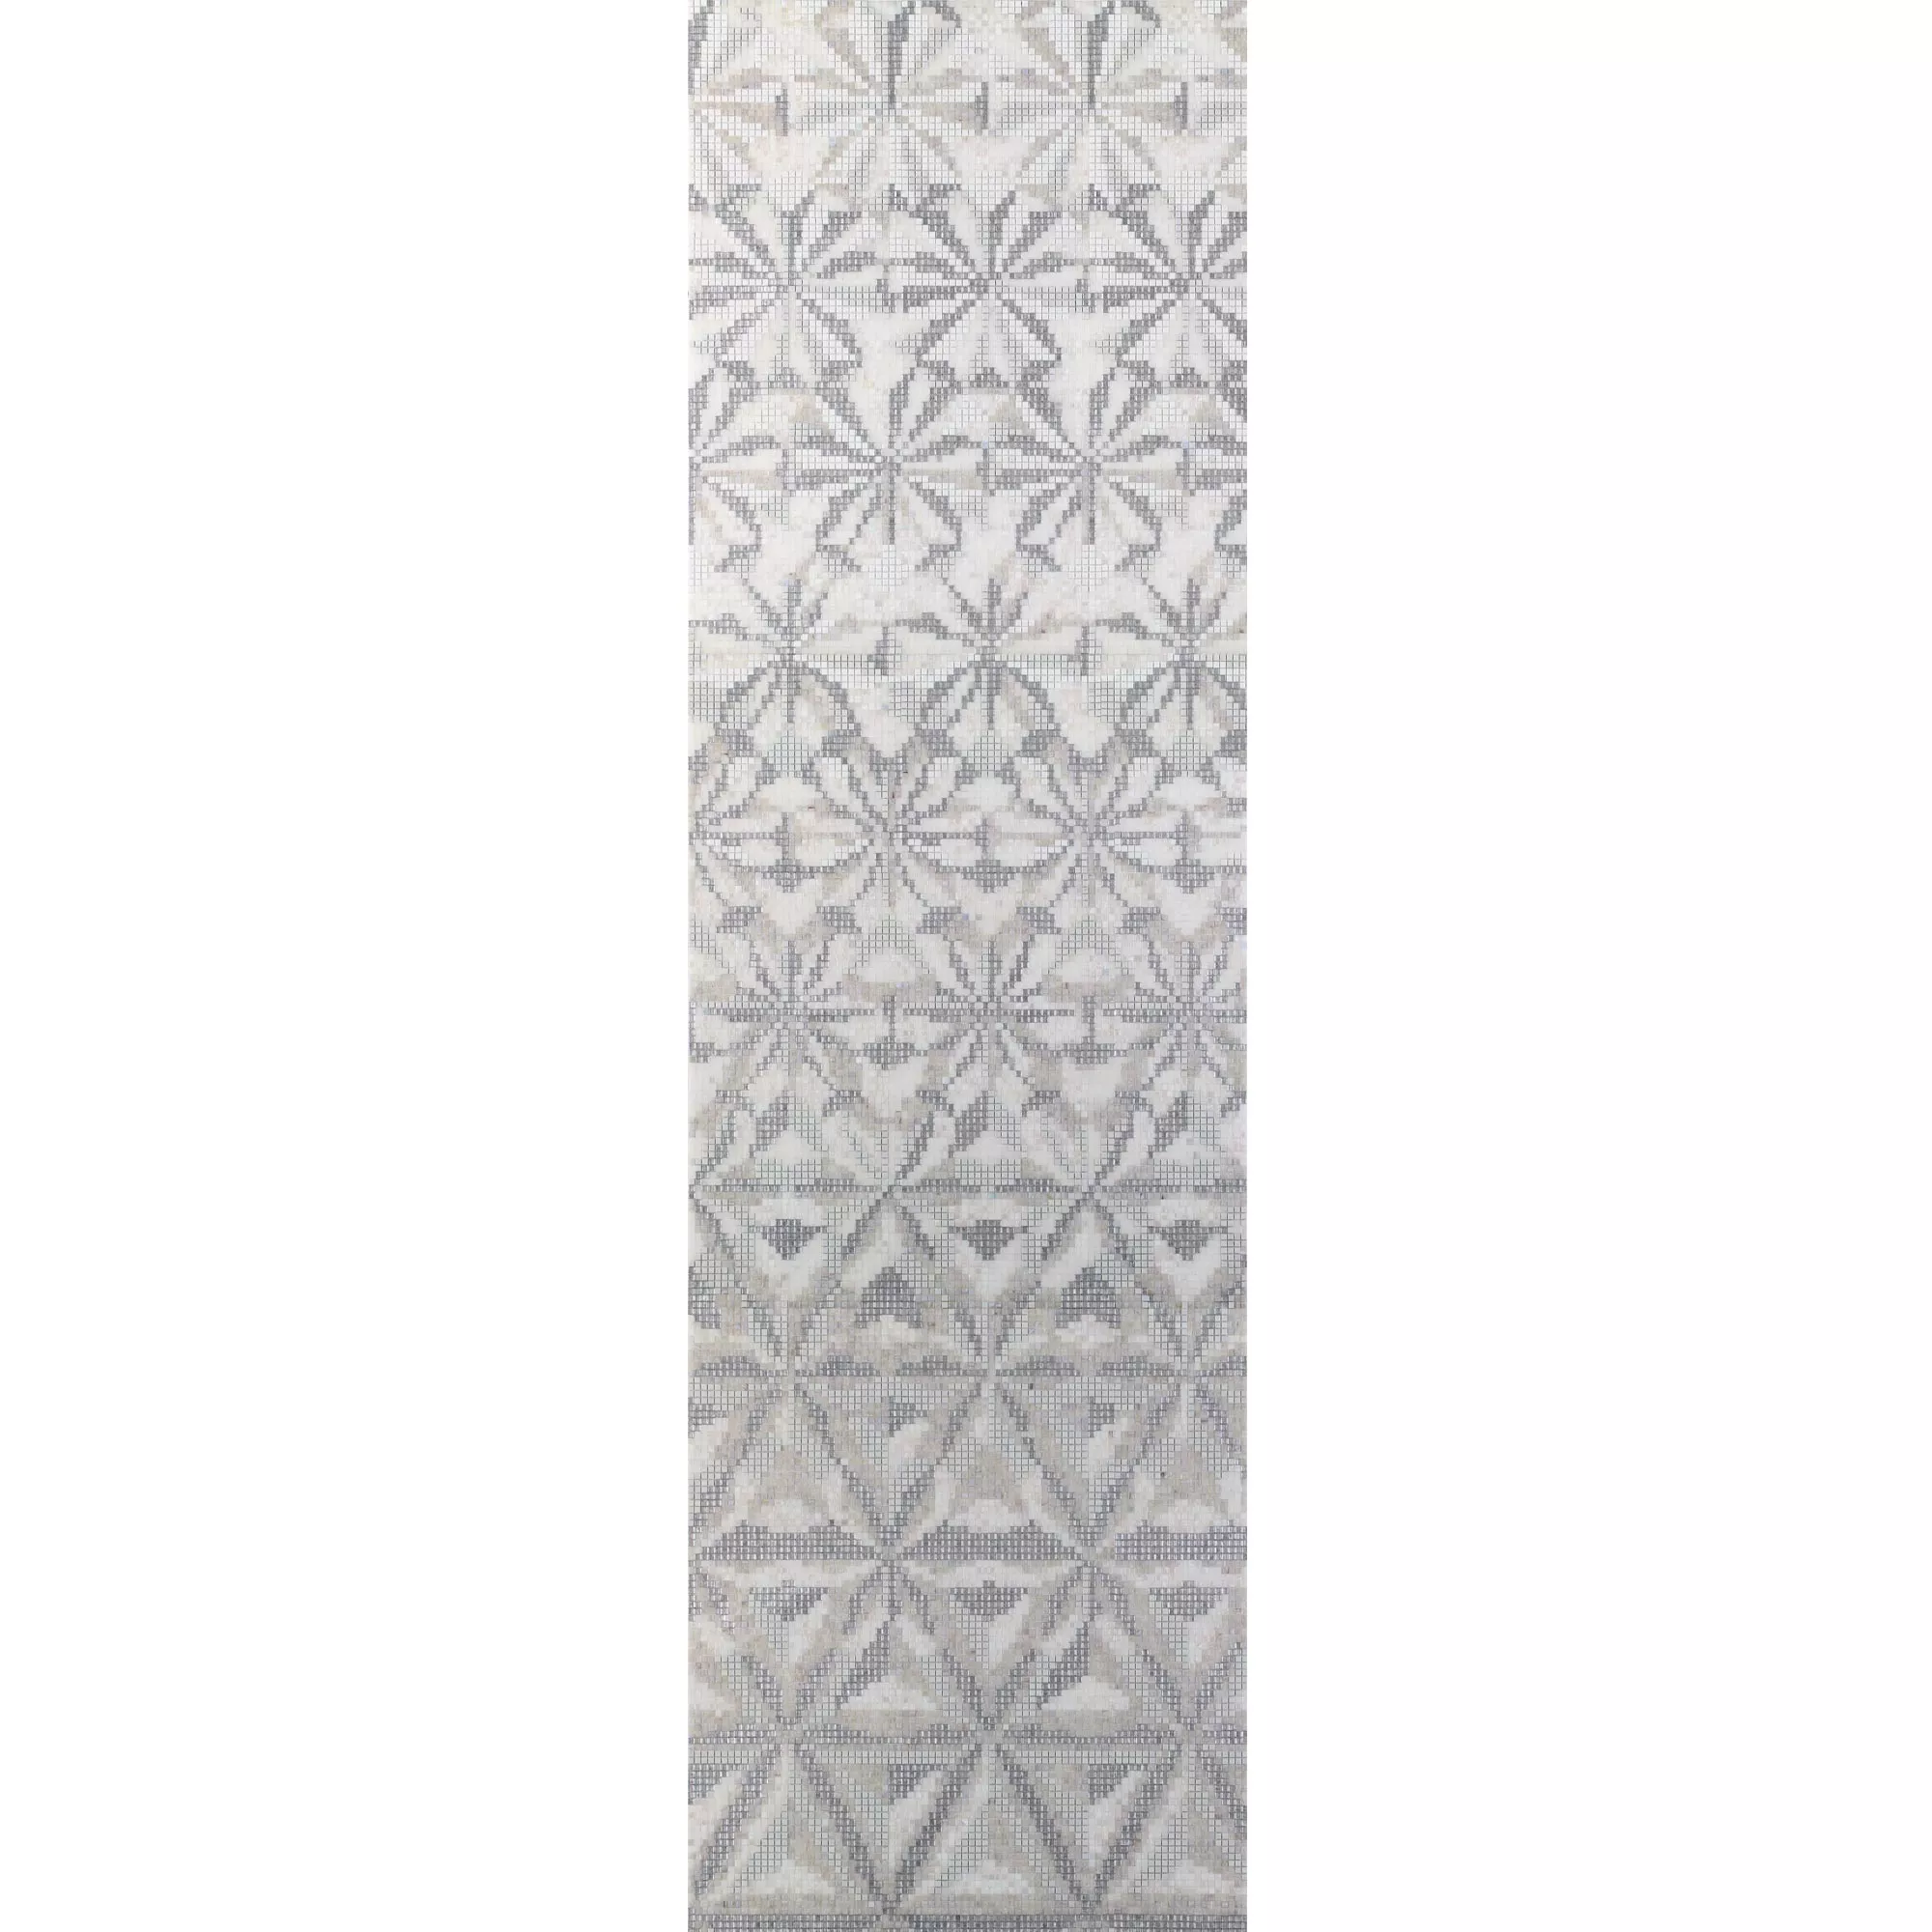 Glass Mosaic Picture Magicflower White 130x240cm